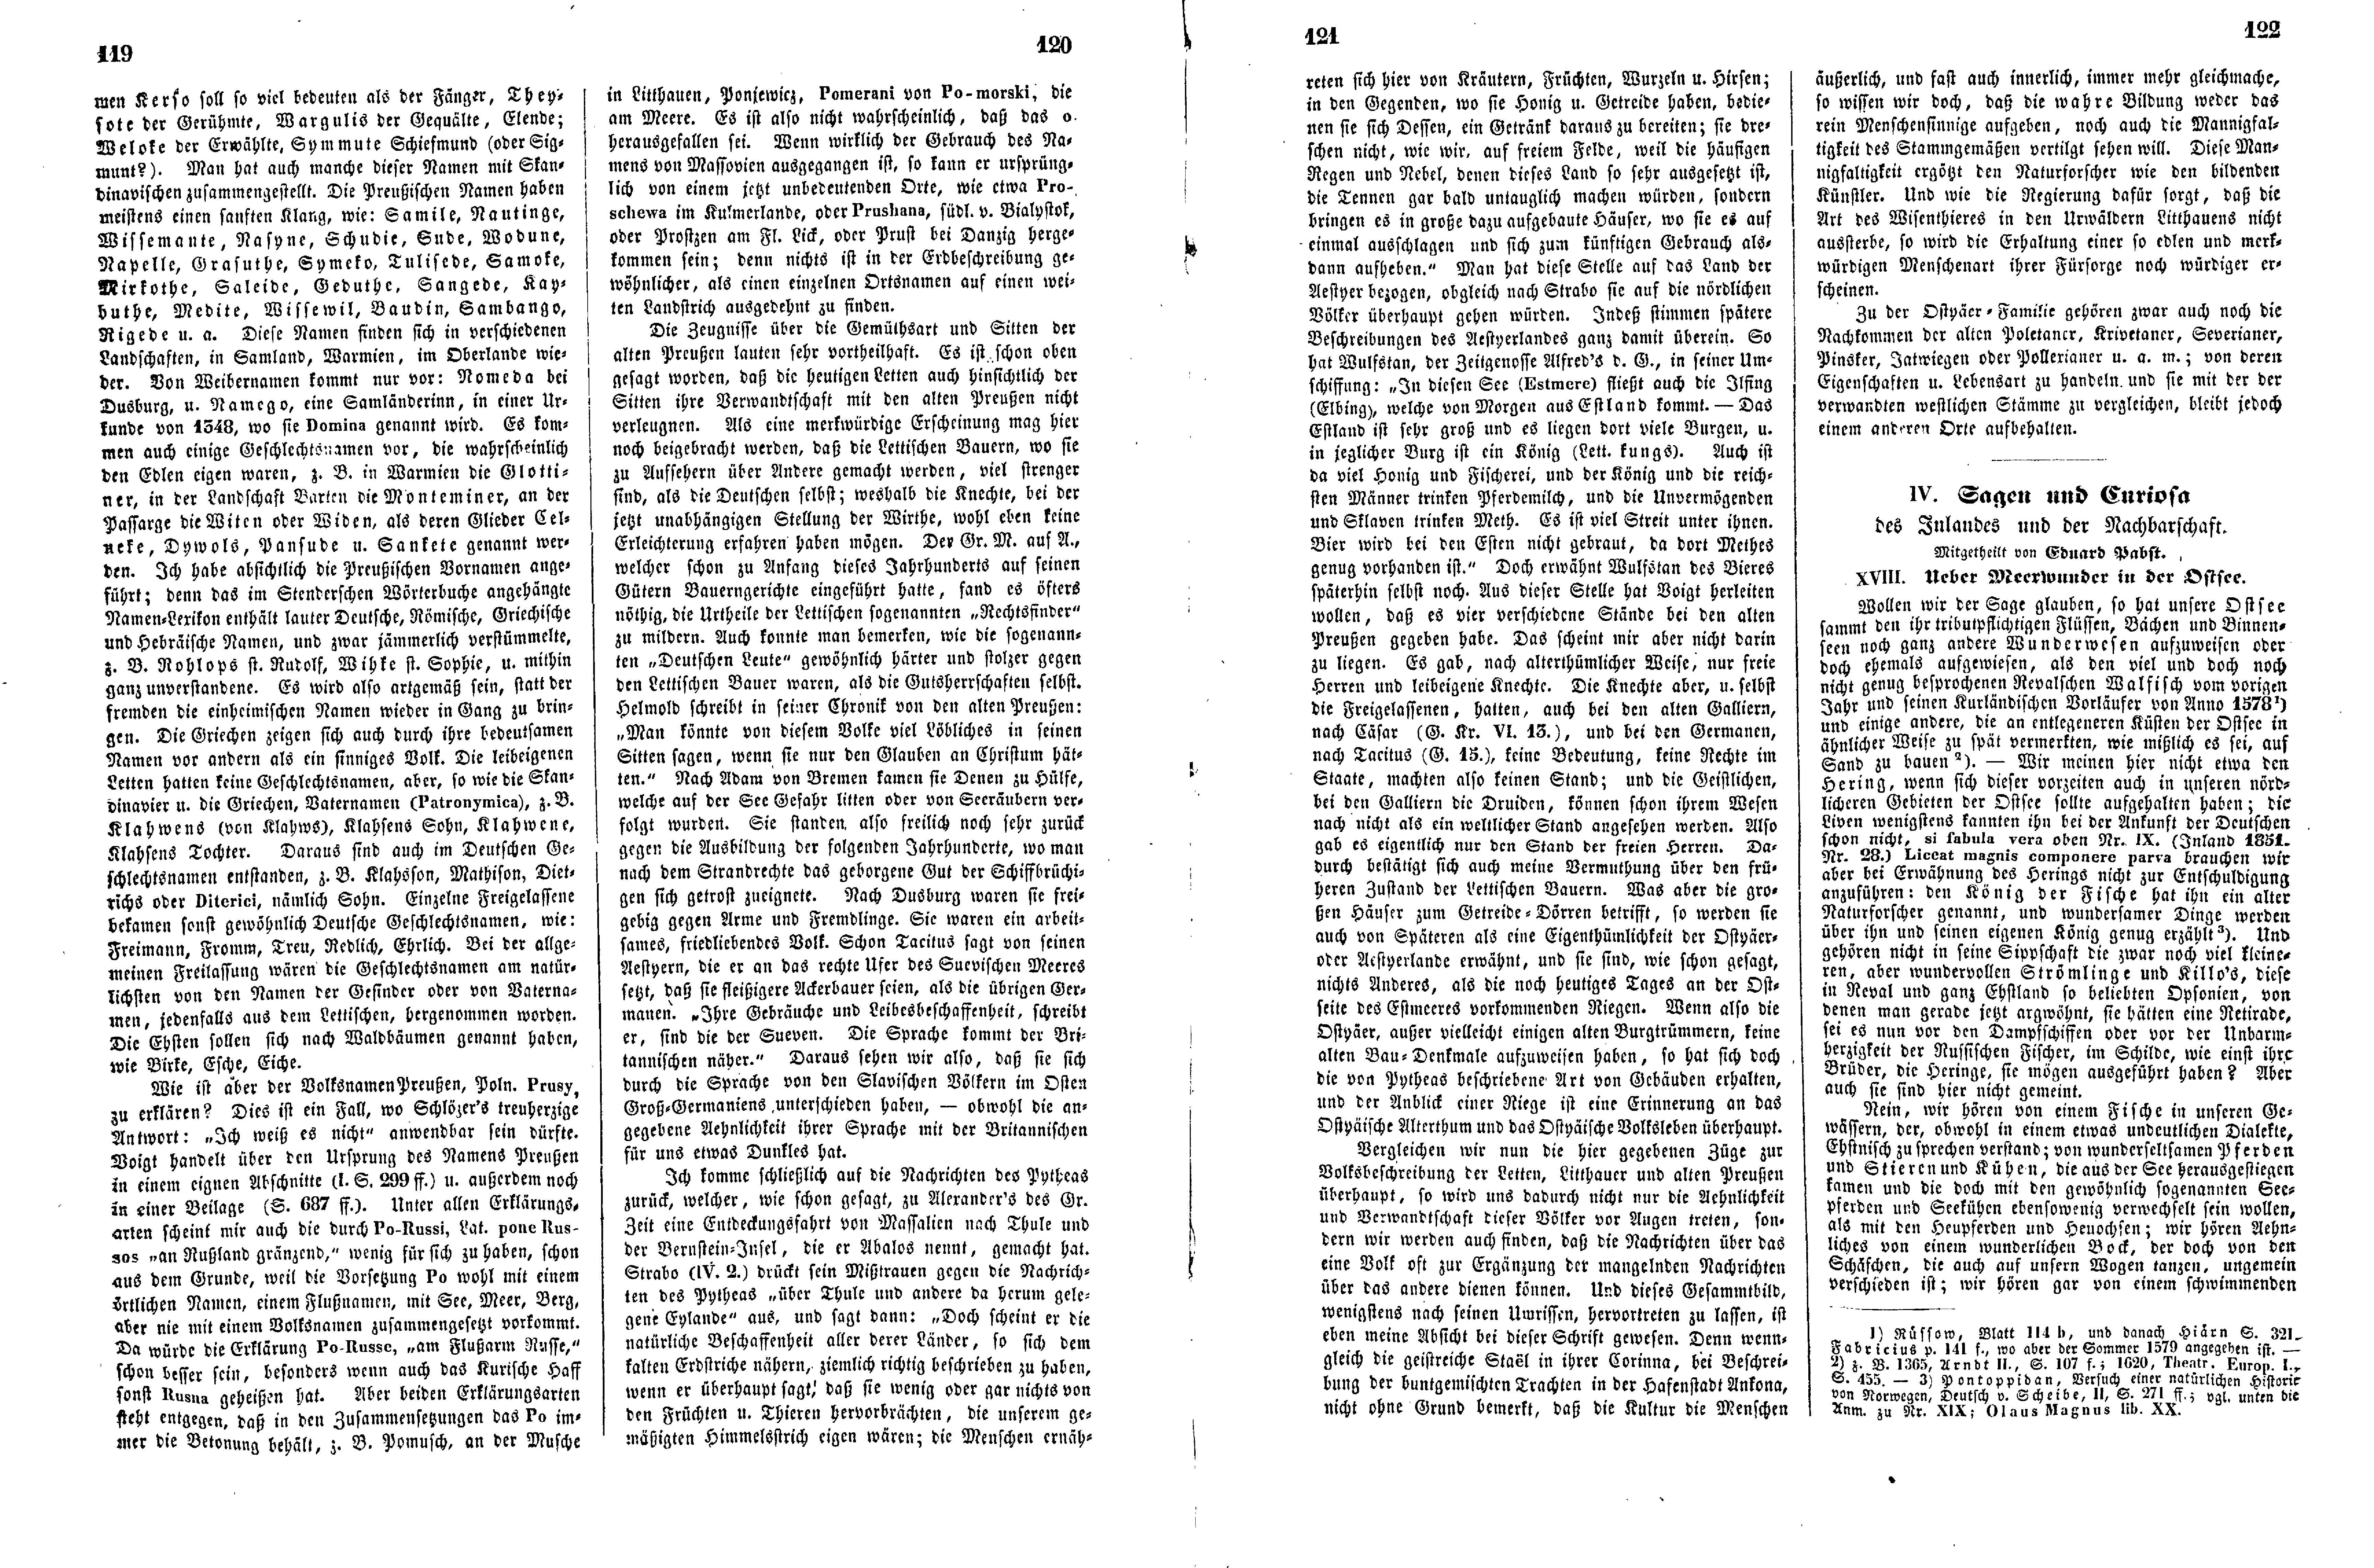 Das Inland [17] (1852) | 34. (119-122) Main body of text